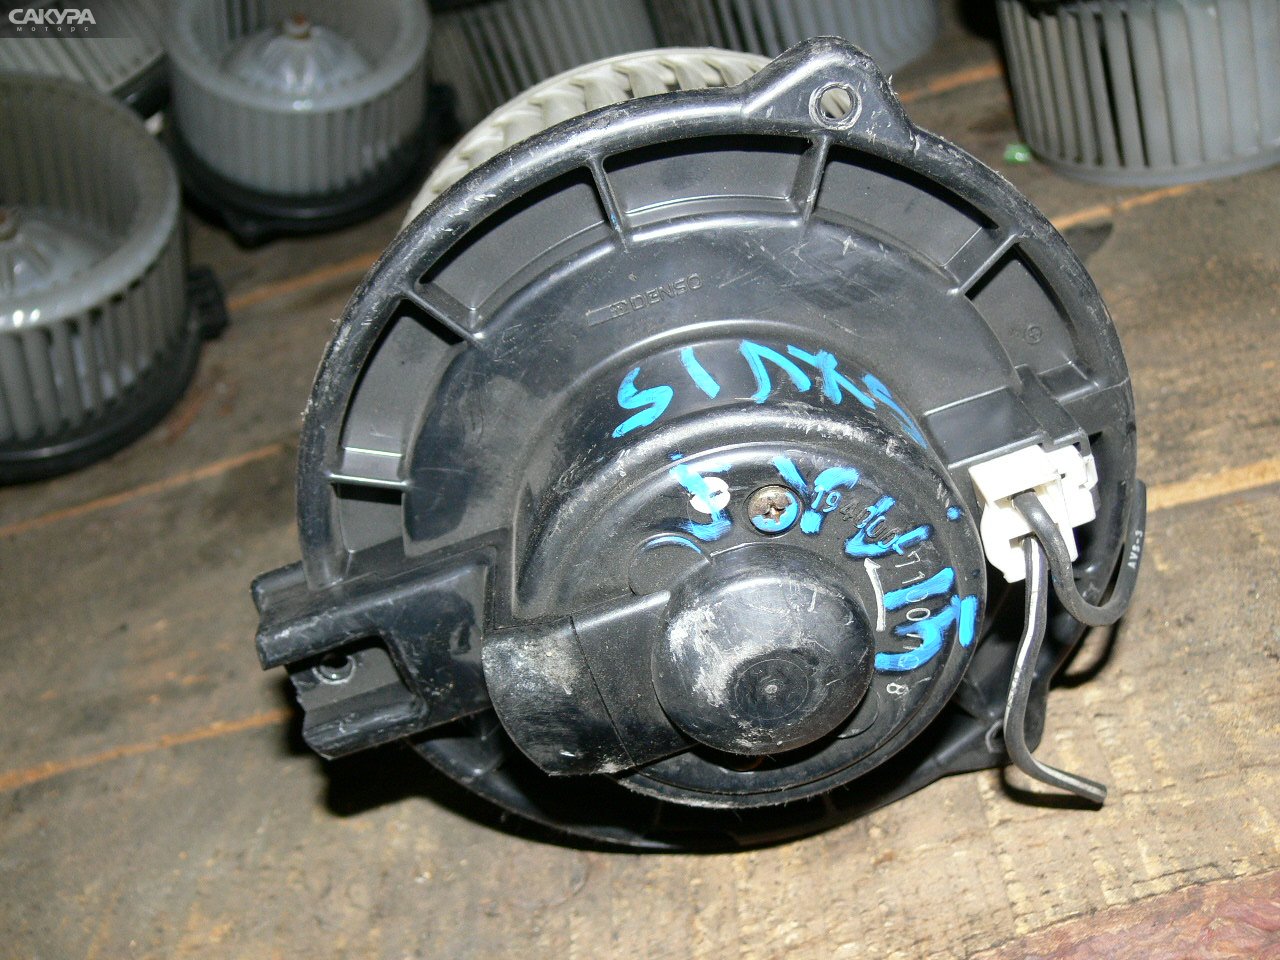 Вентилятор печки Toyota Scepter SXV15: купить в Сакура Иркутск.